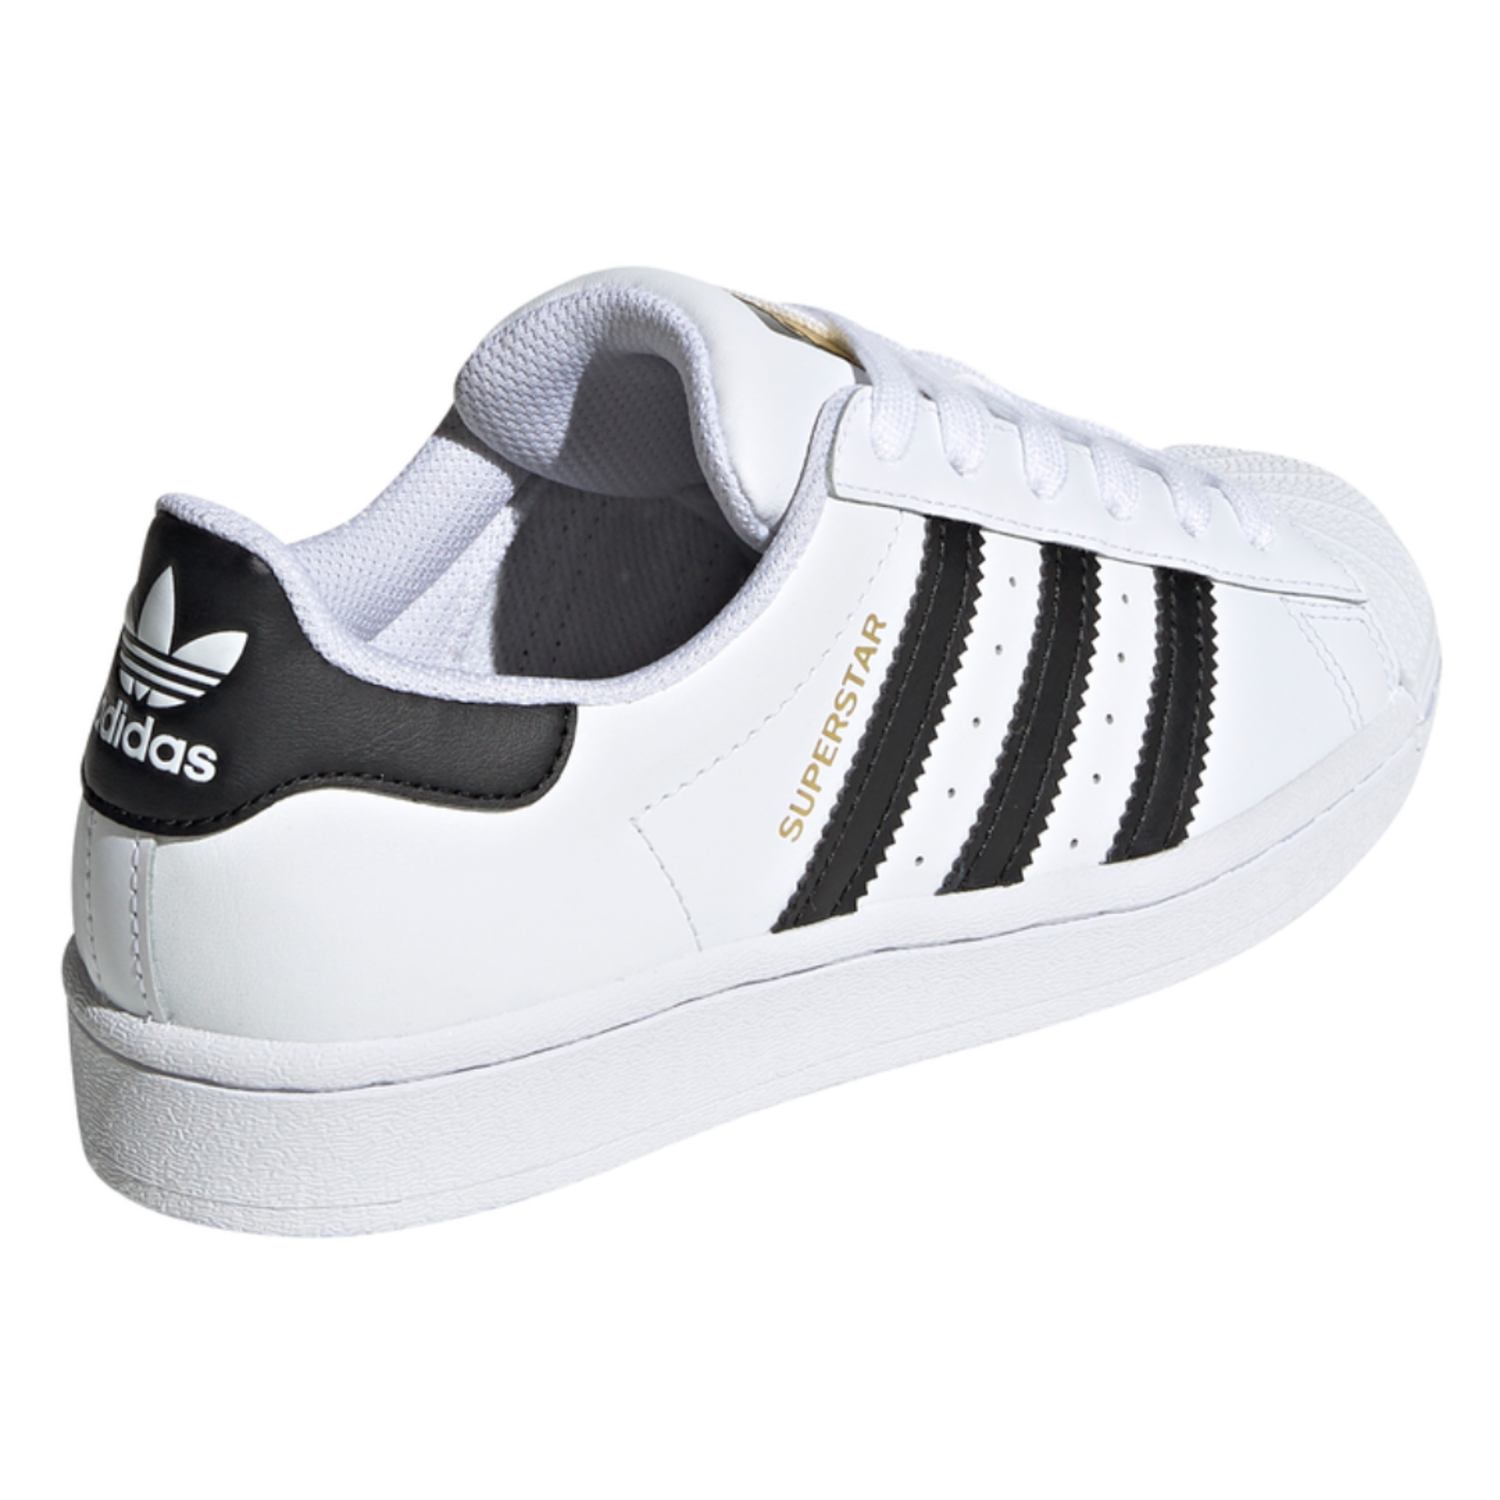 Adidas Superstar Kiddie - Kobbler Kids St - FtwWht/CBlack/FtwWht J Laurent in Canada Shoes